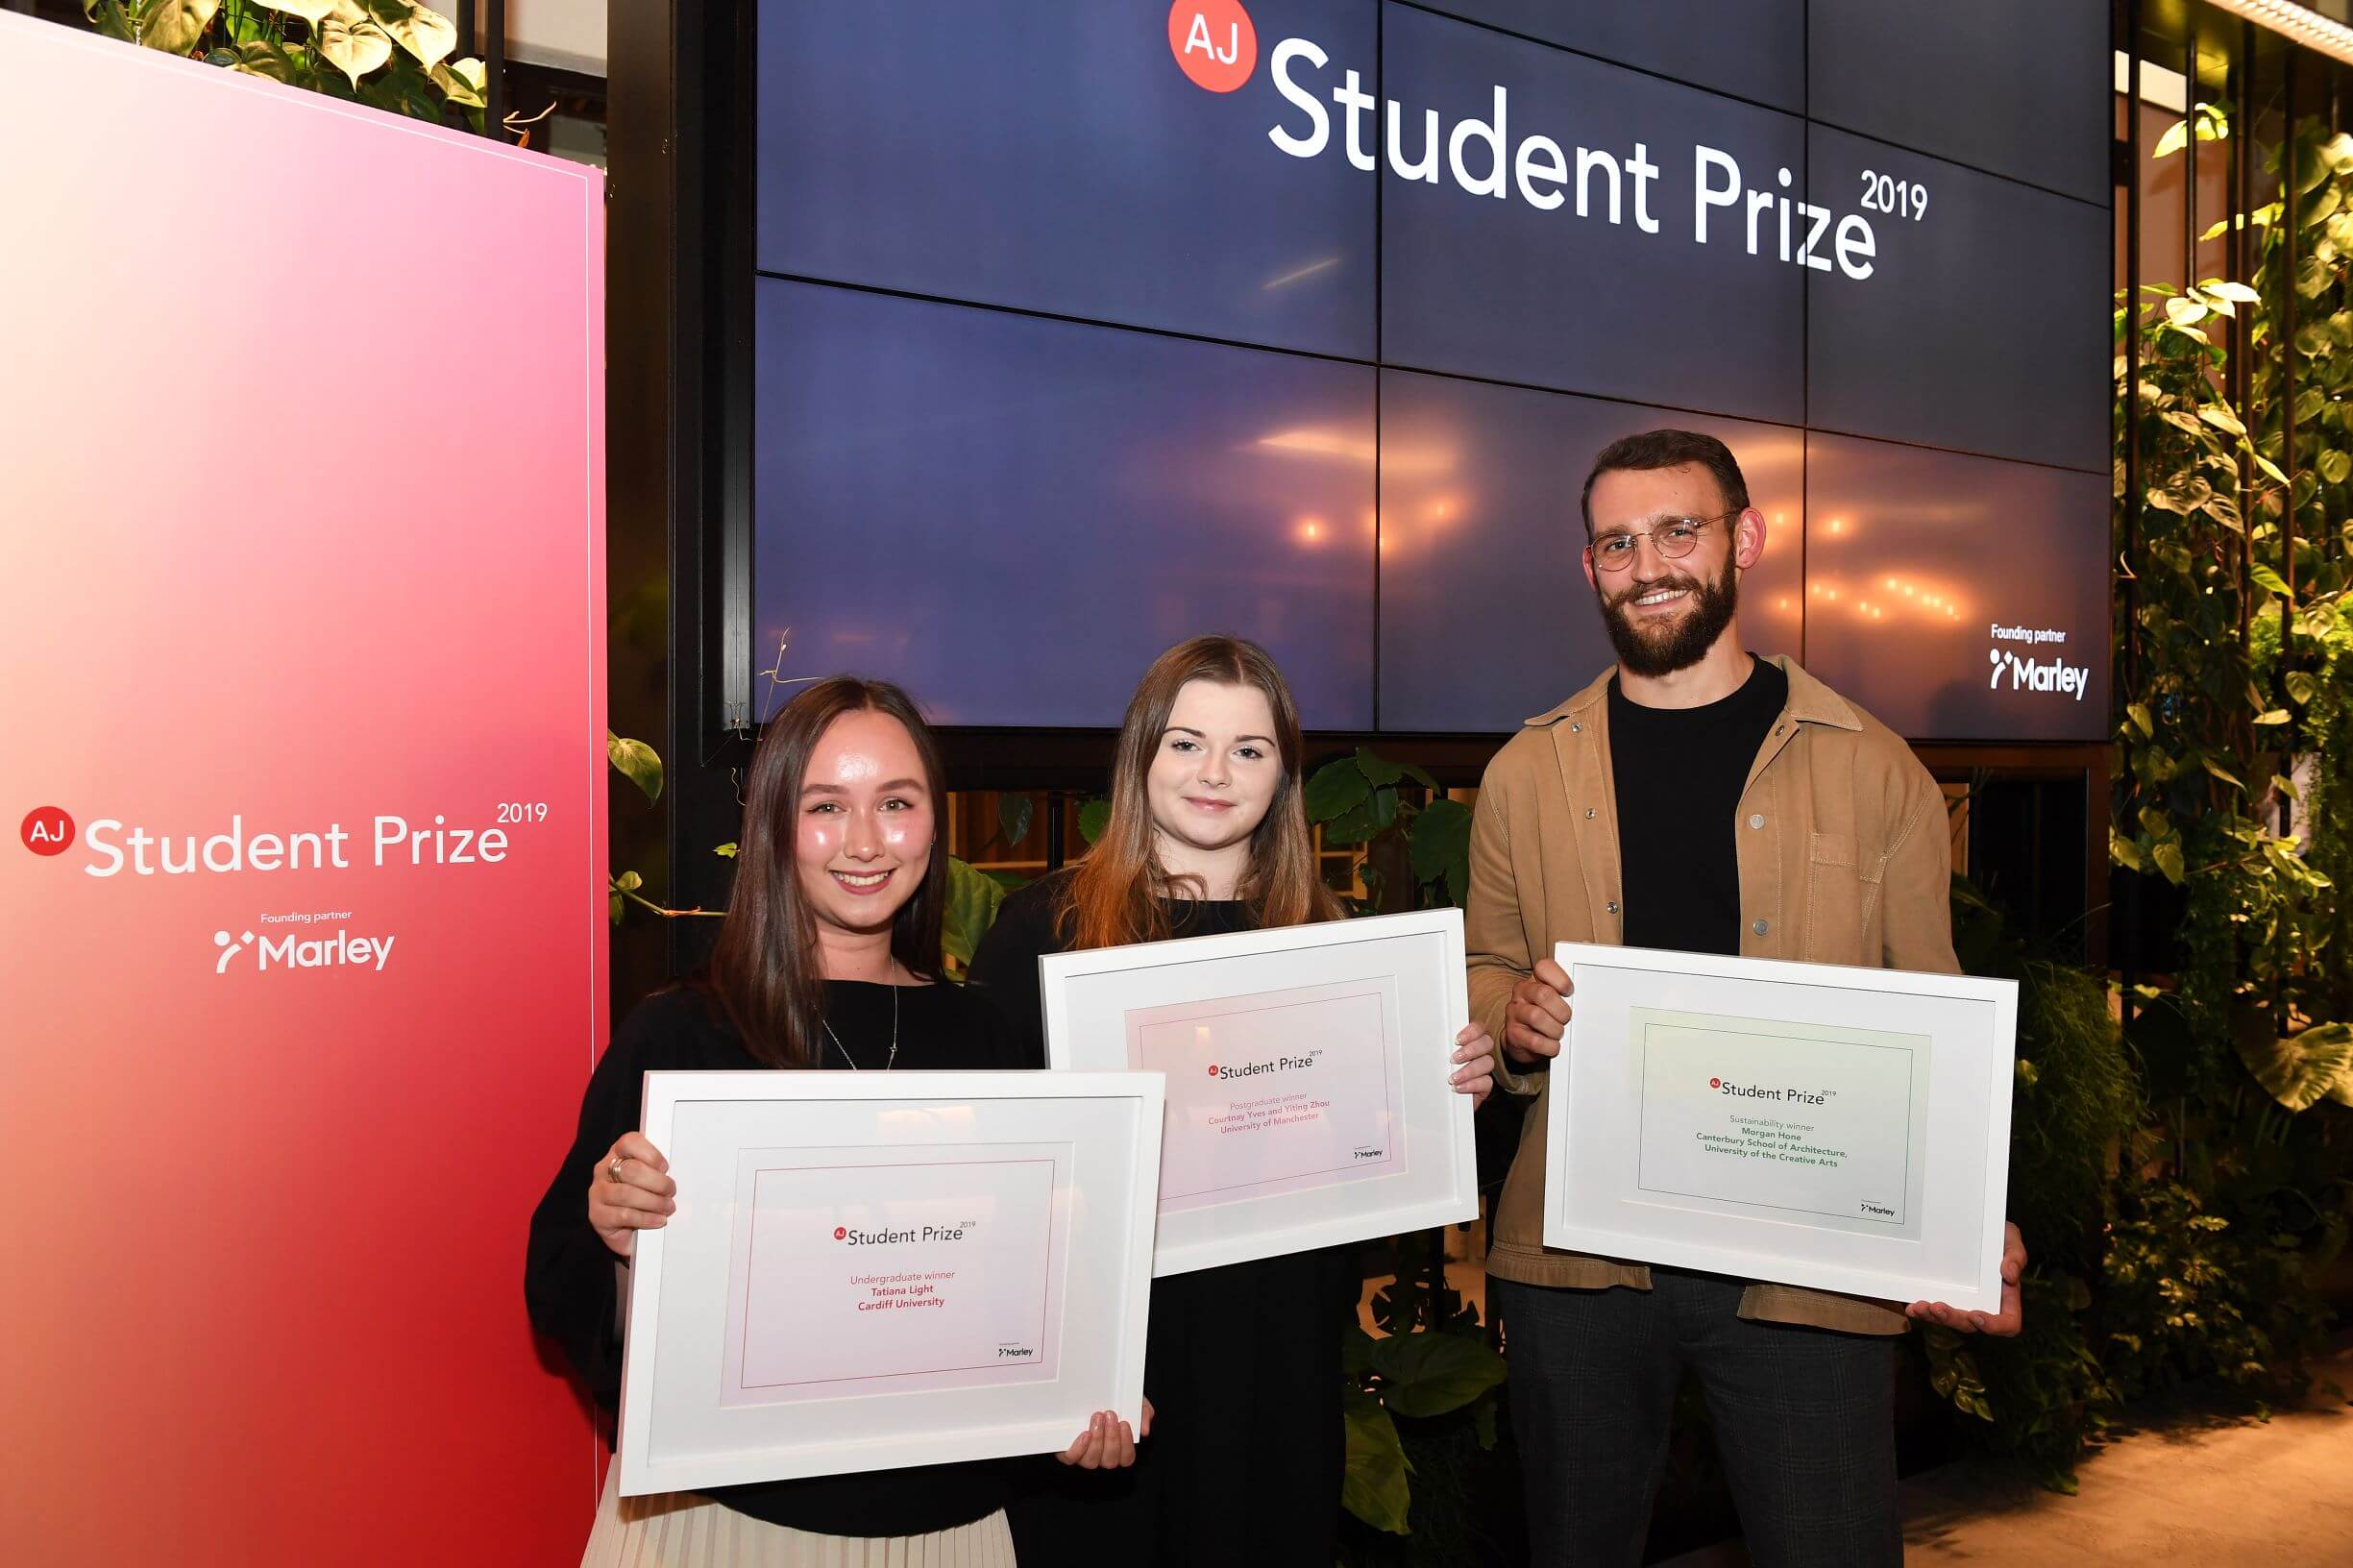 AJ Student Prize Award Winners 2019